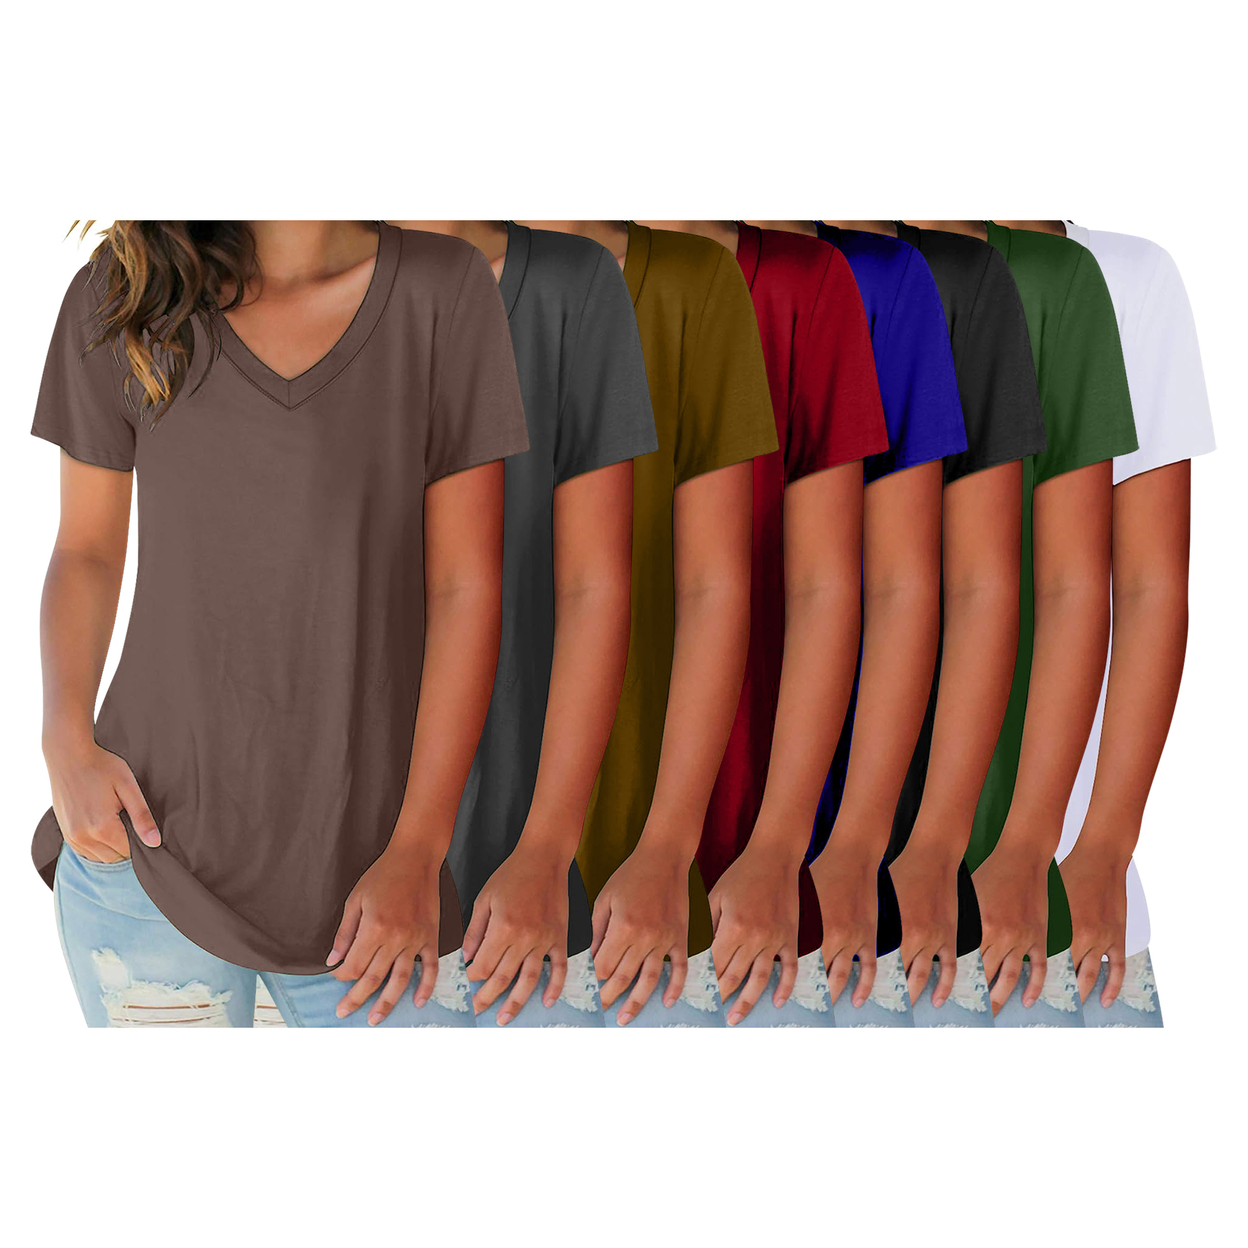 2-Pack: Women's Ultra Soft Smooth Cotton Blend Basic V-Neck Short Sleeve Shirts - Navy & Mustard, Small